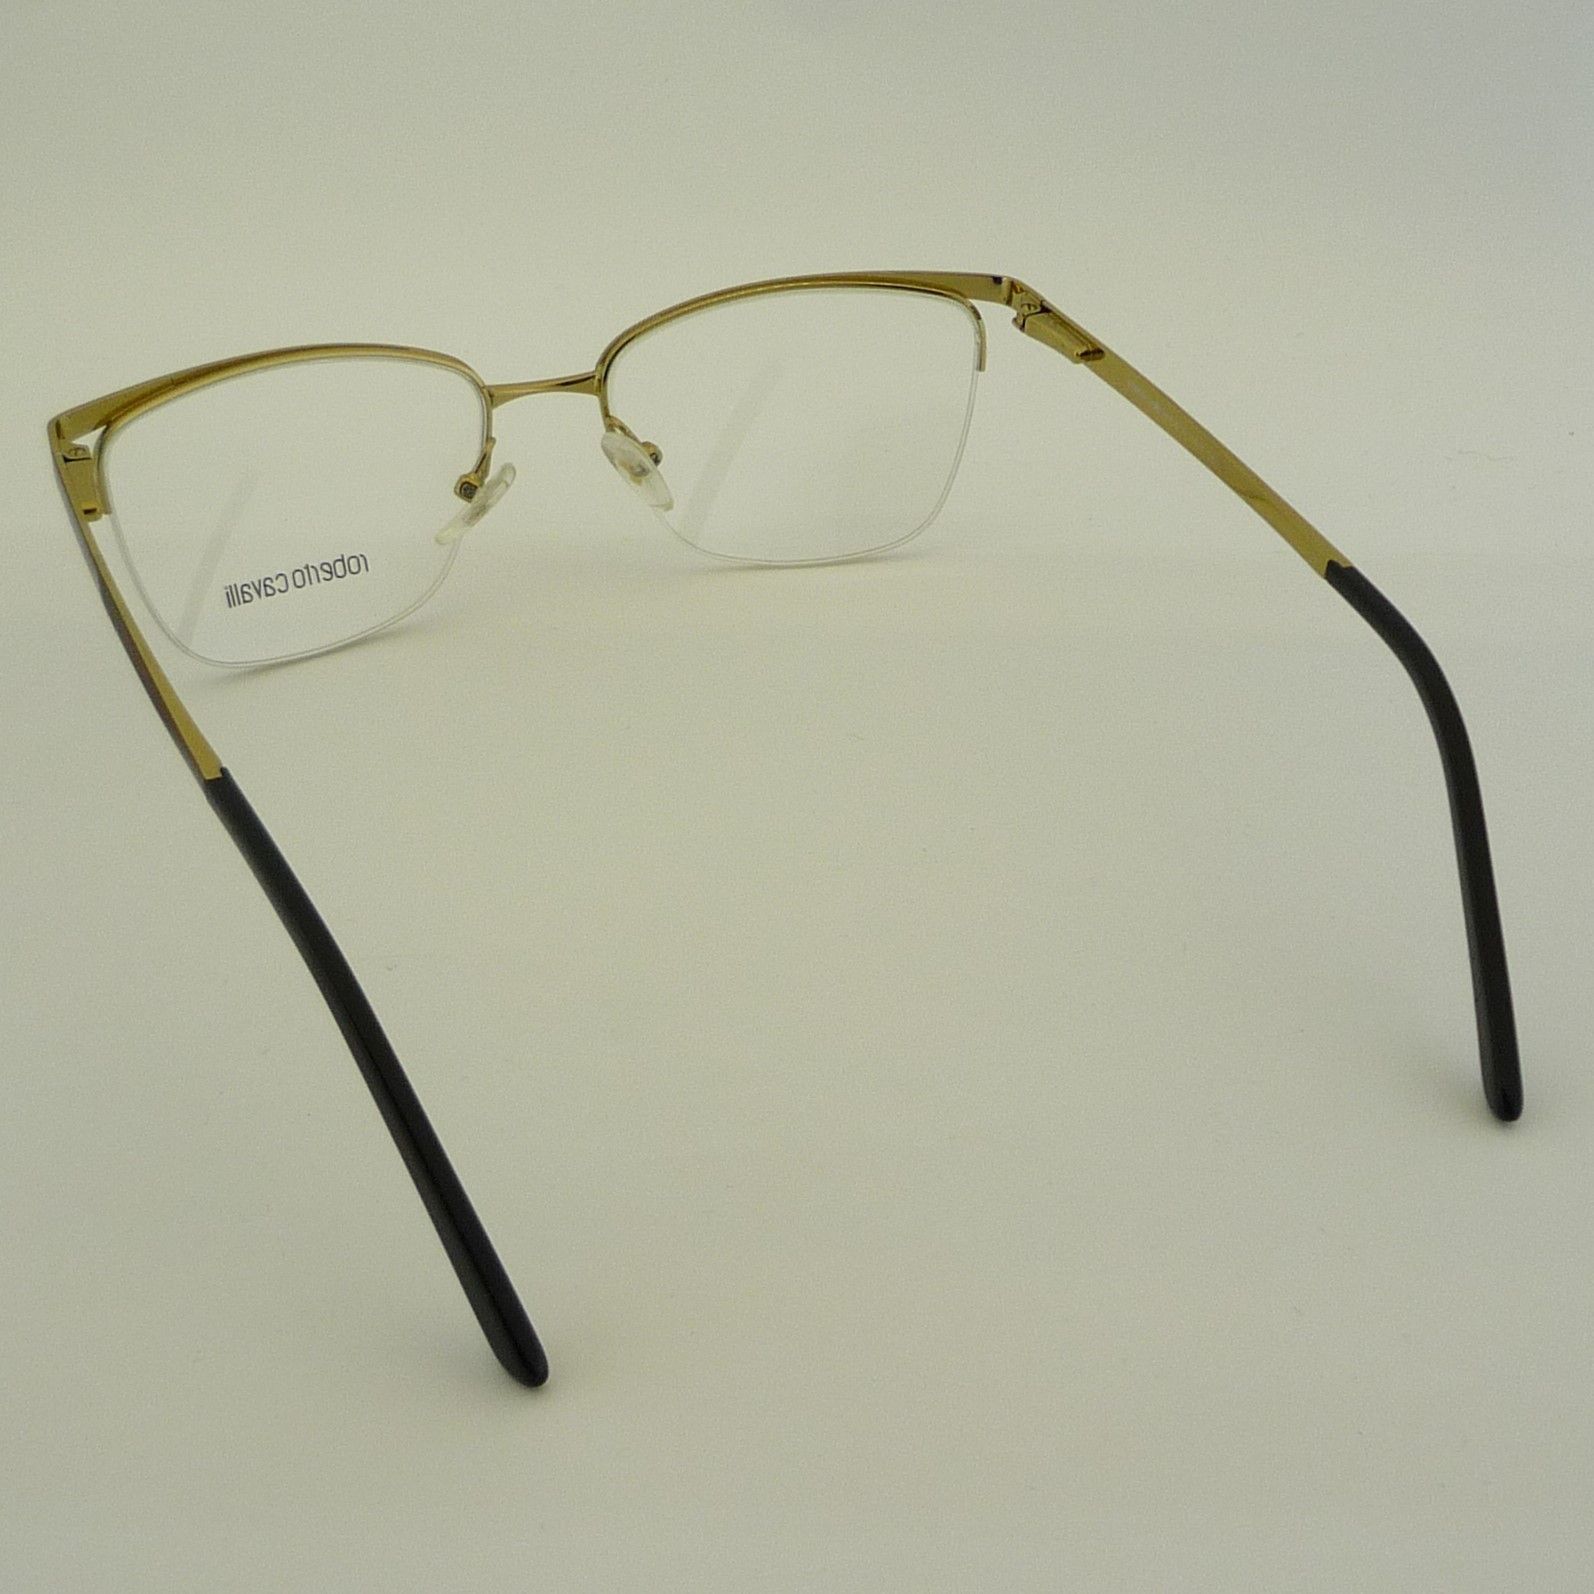 فریم عینک طبی زنانه روبرتو کاوالی مدل 6581c2 -  - 9